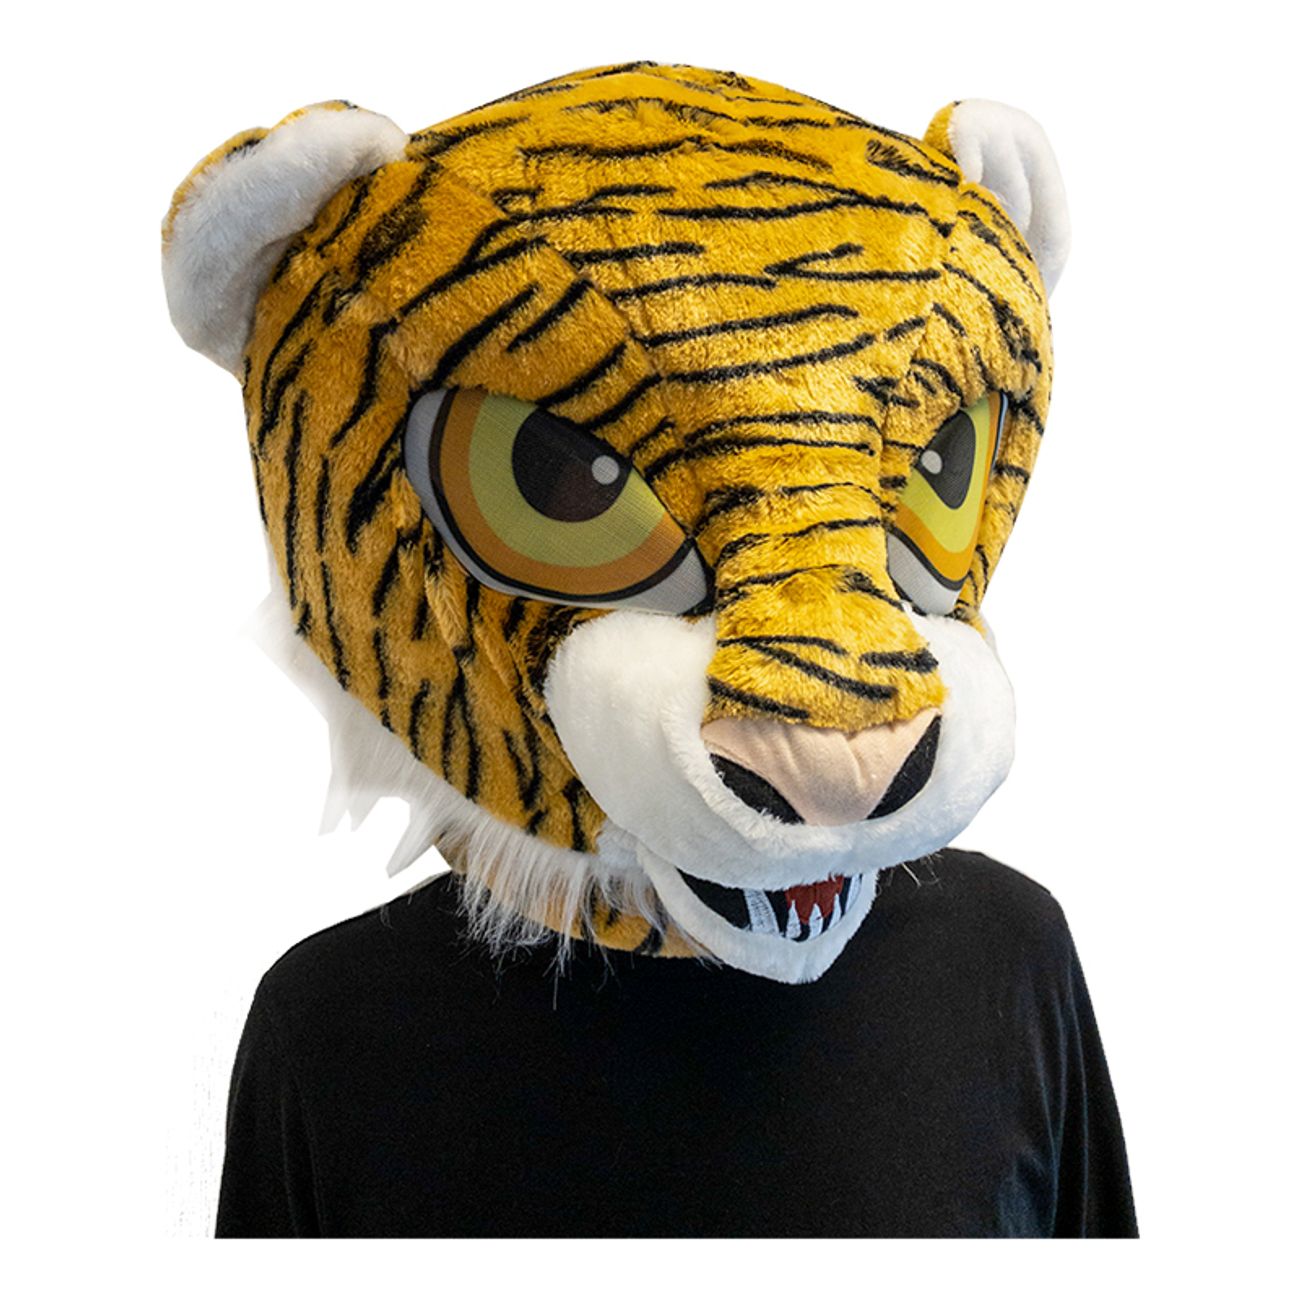 stort-tigerhuvud-mask-76469-1